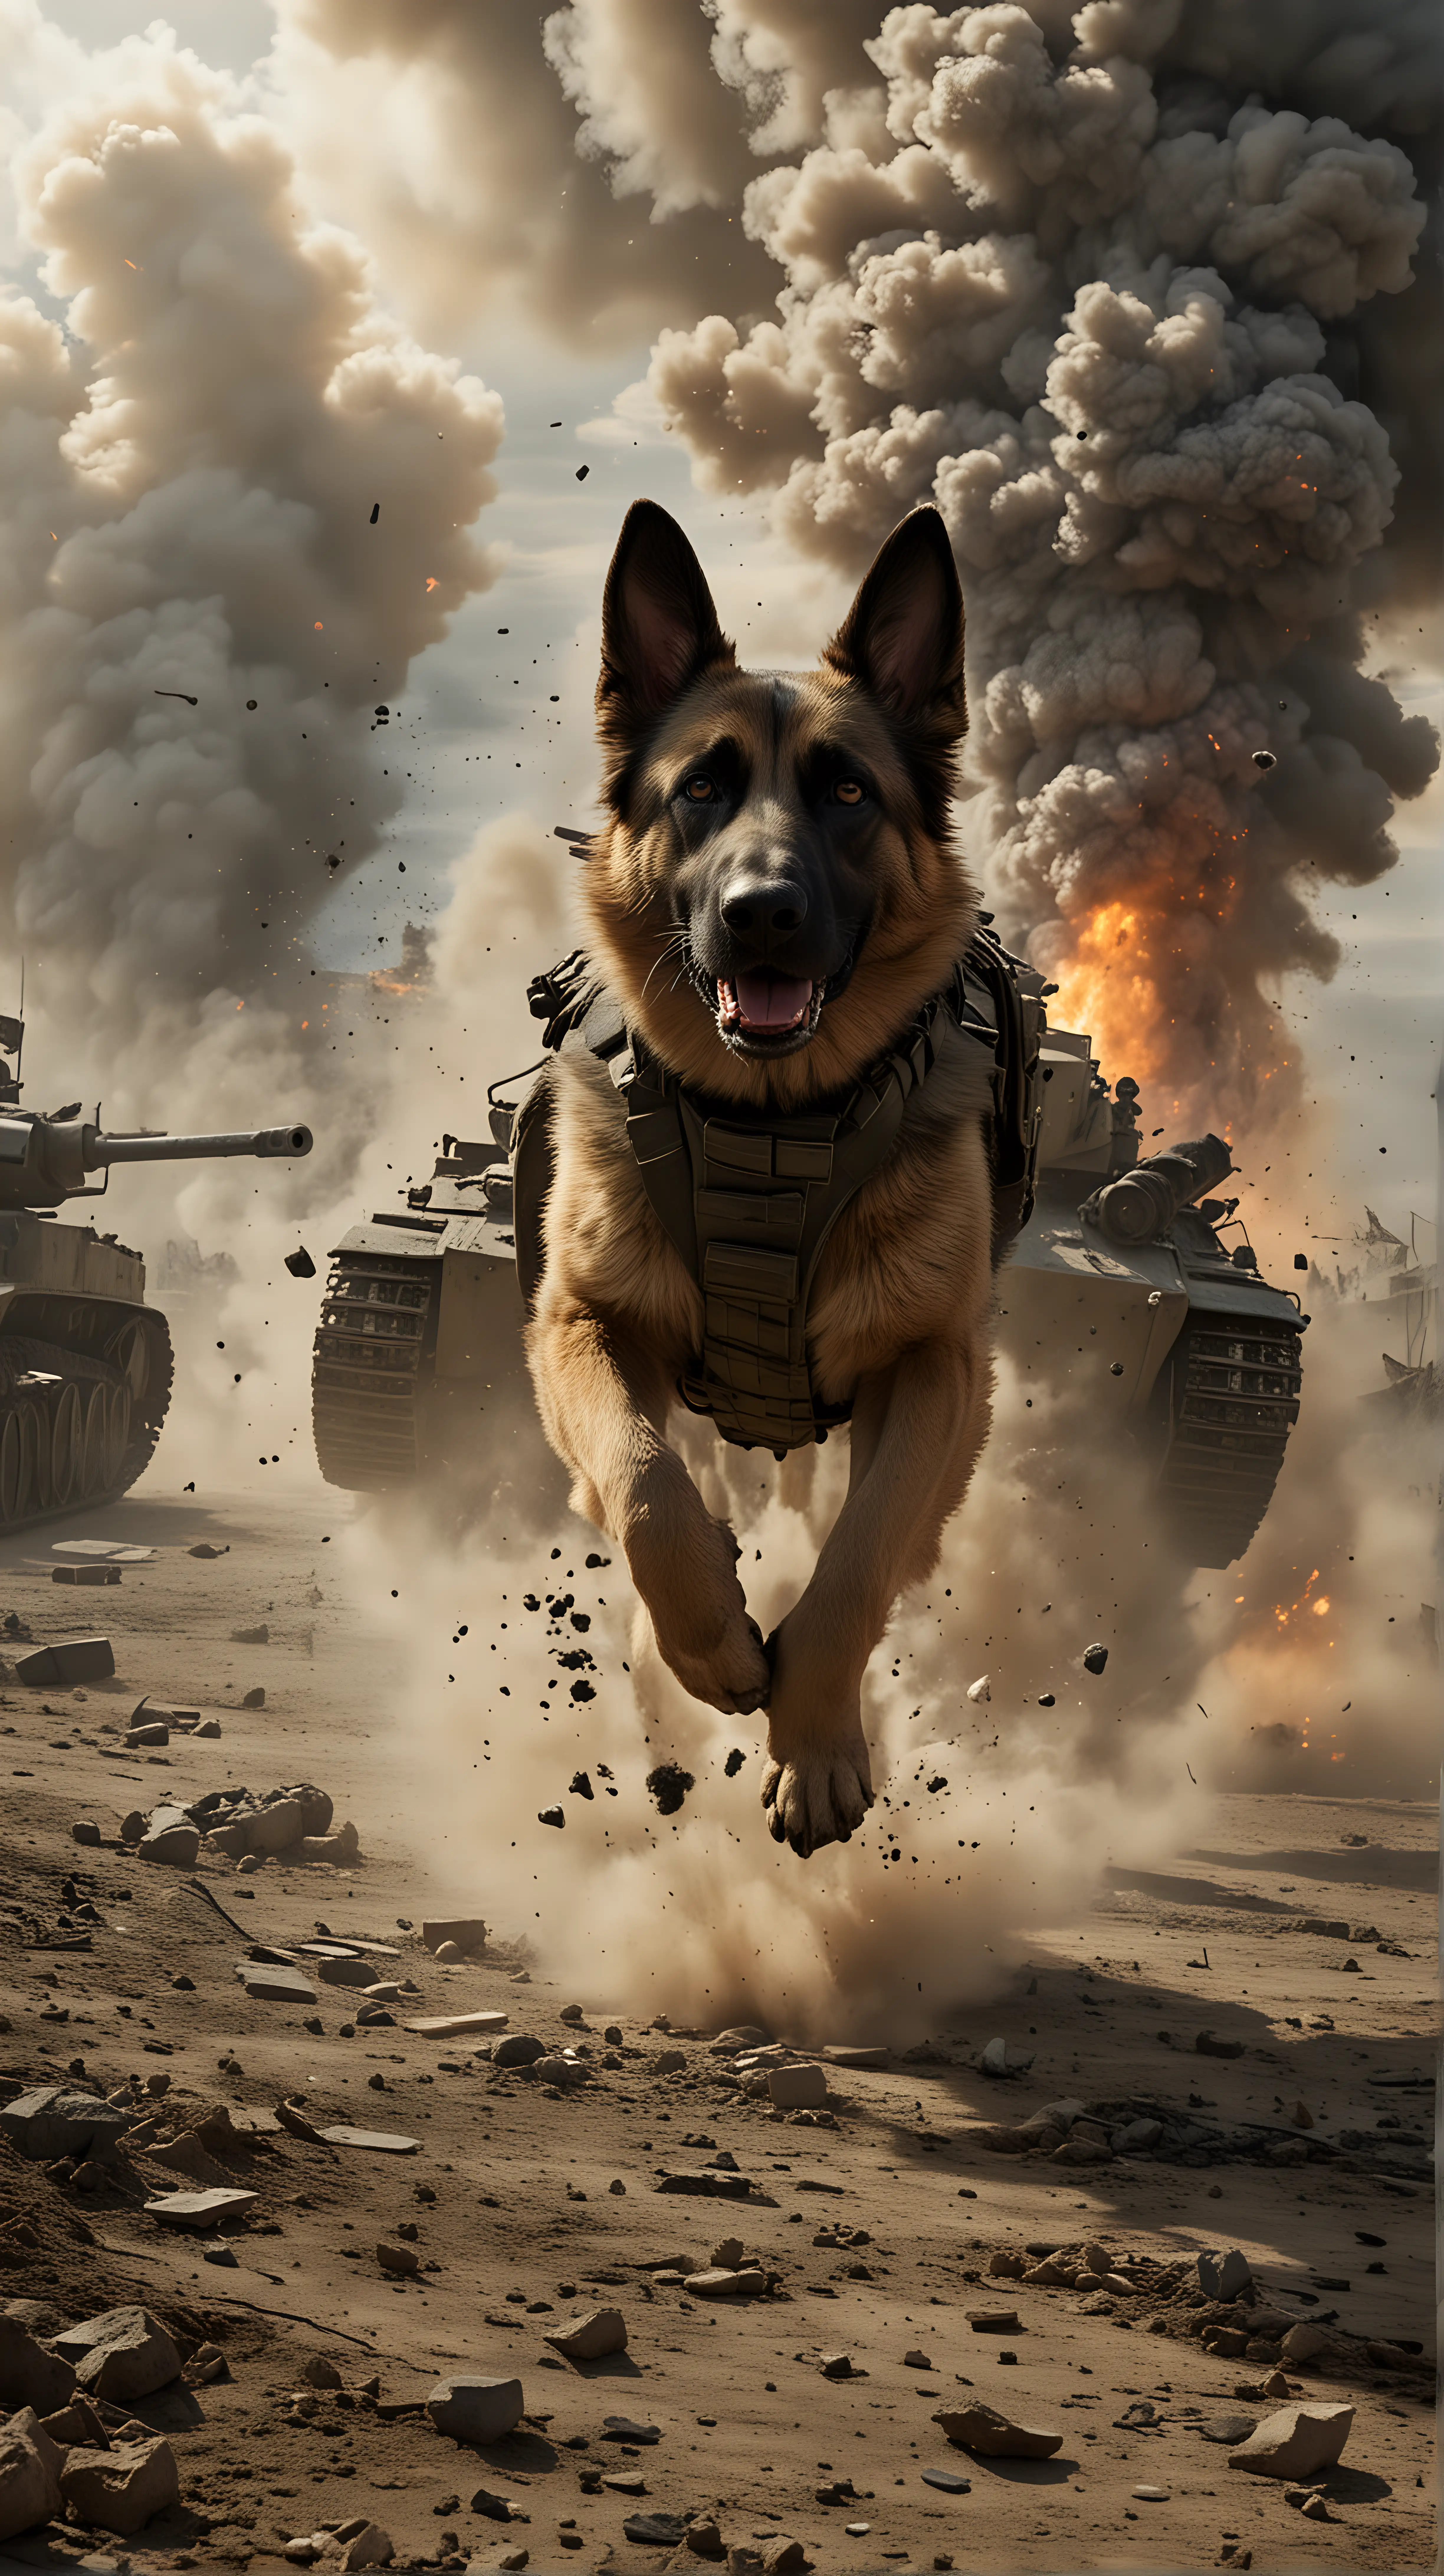 Intense World War II Scene German Shepherd Dog Evades Tank Bombing